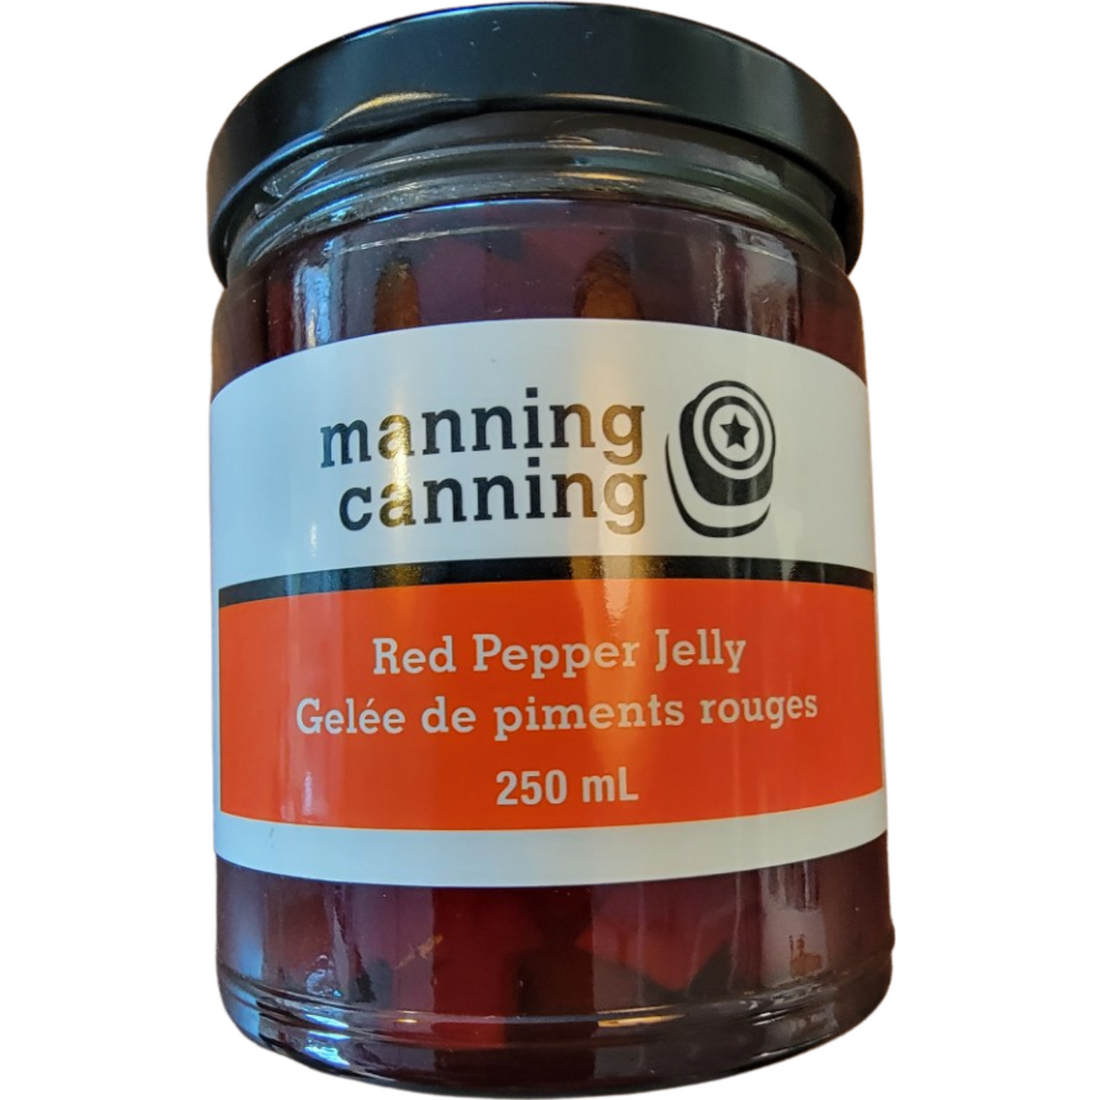 Red Pepper Jelly Ottawa, Canada